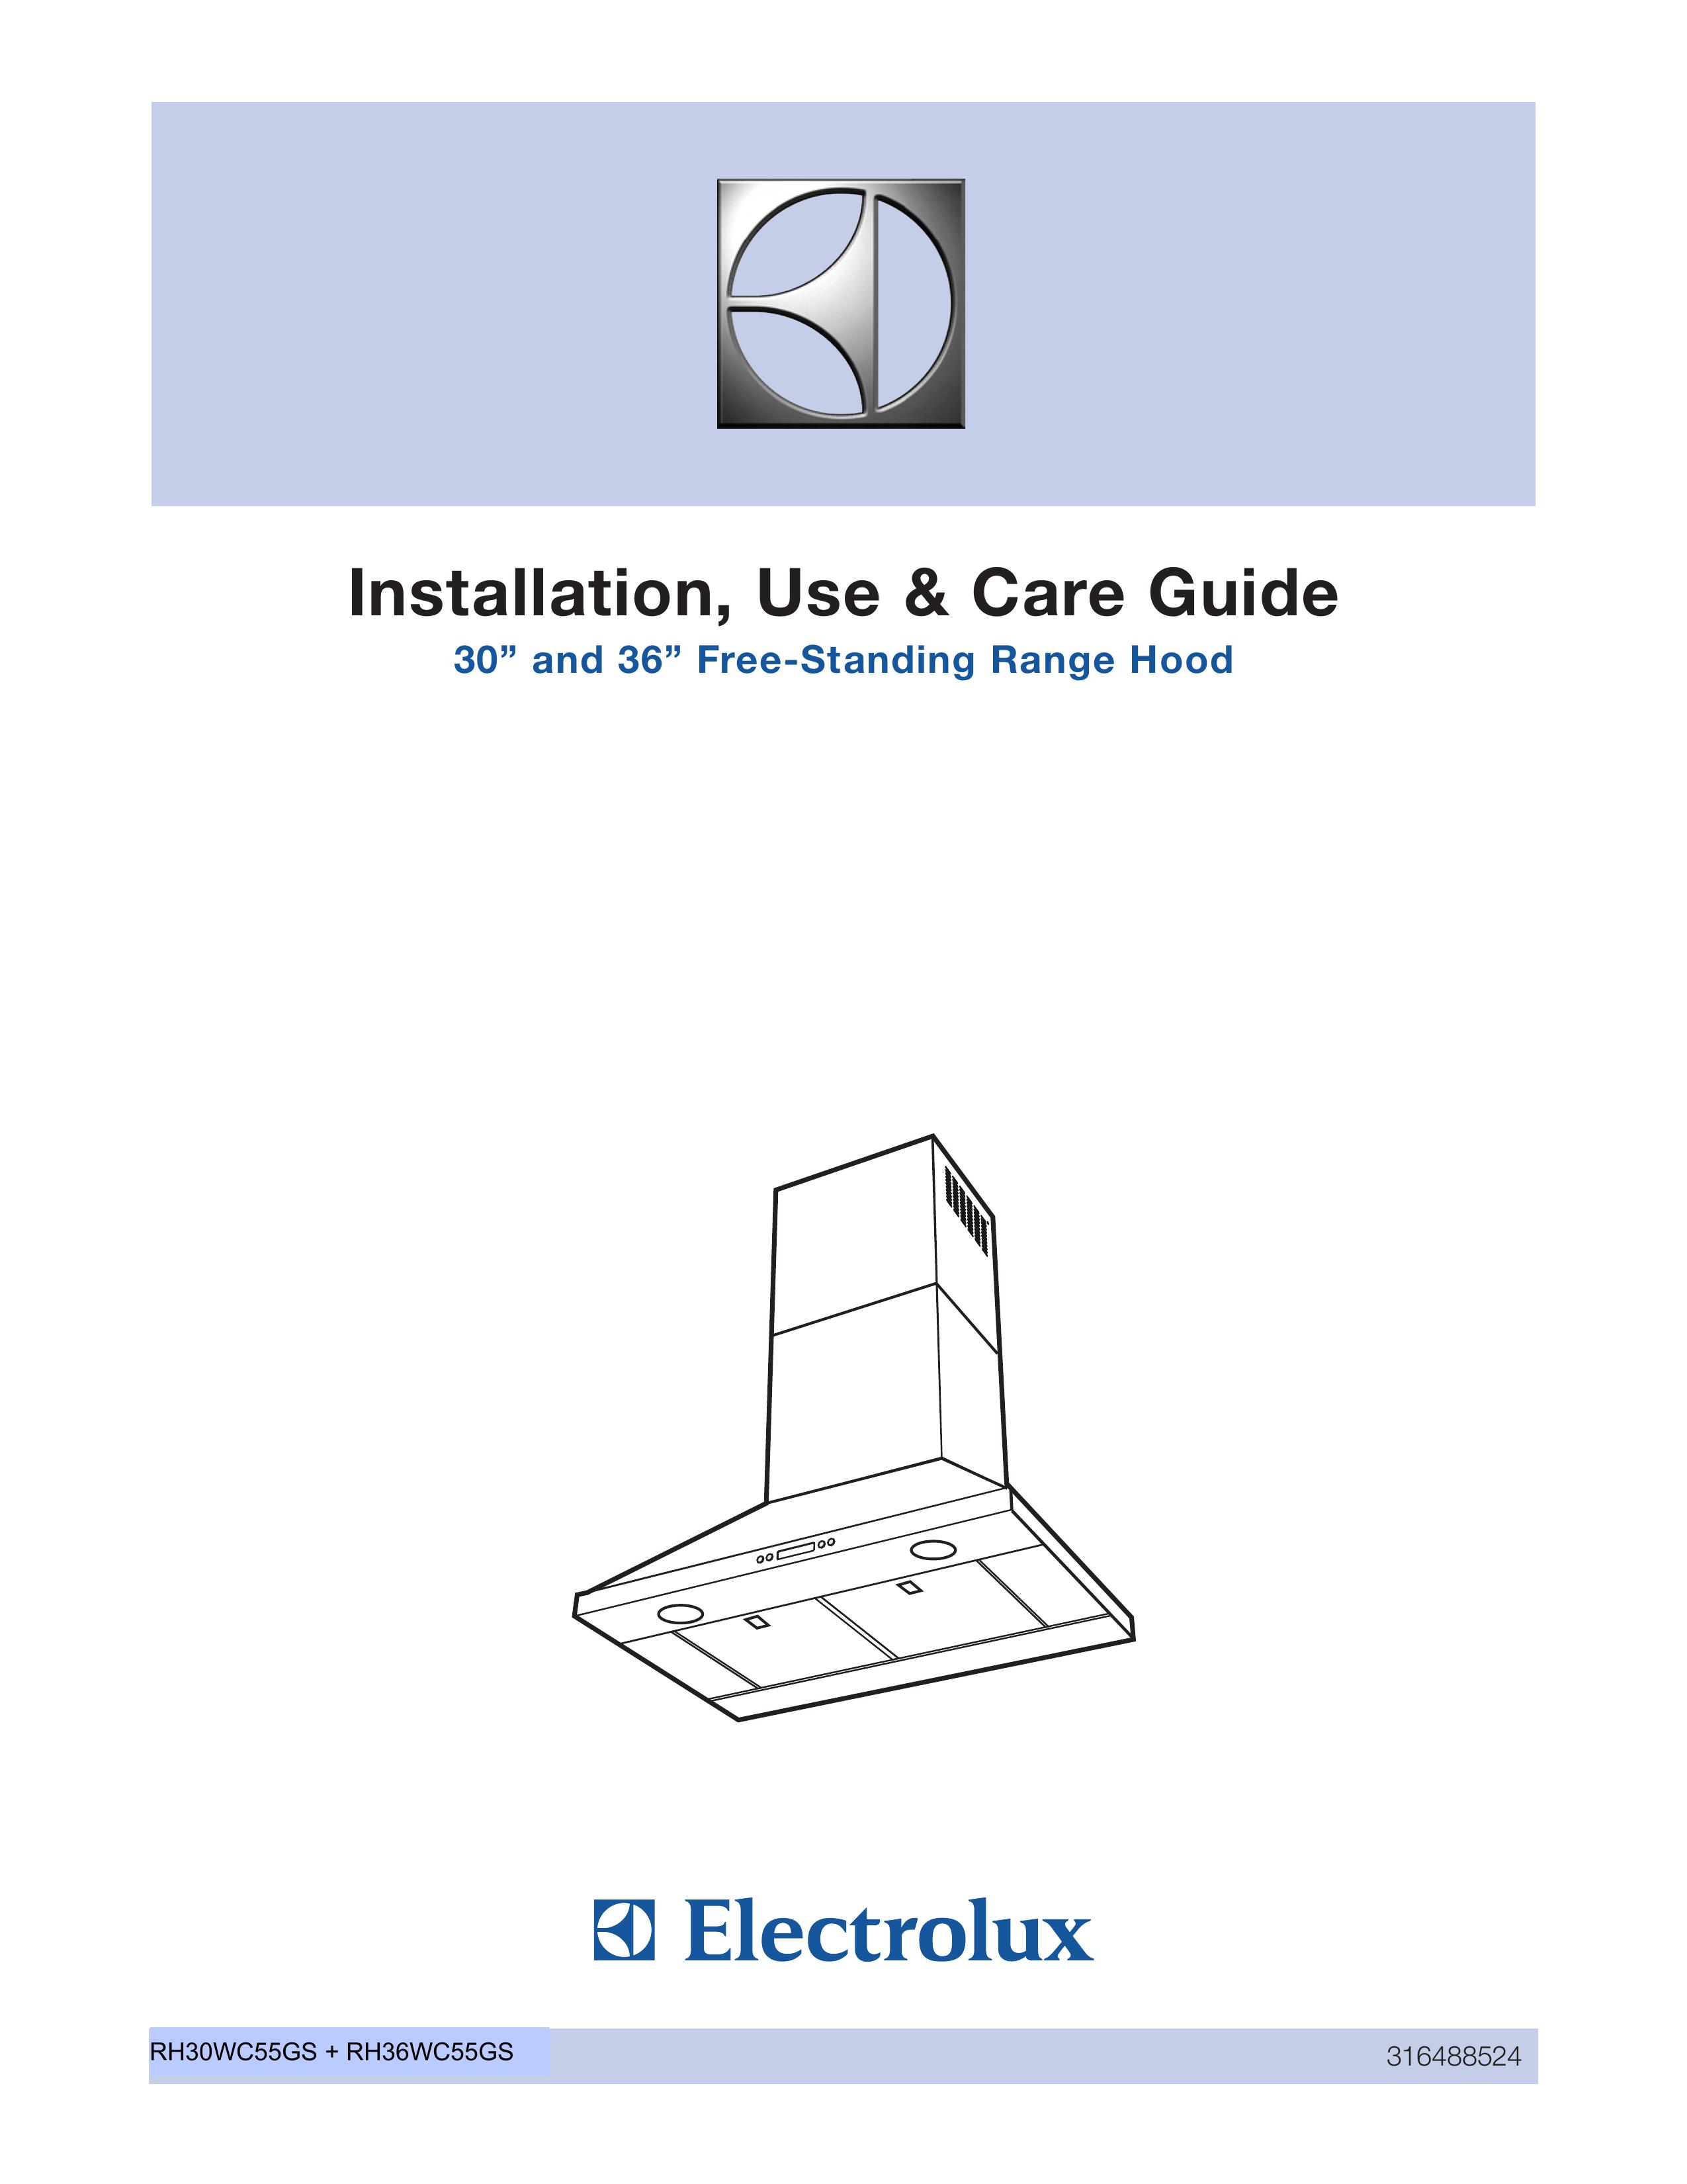 Frigidaire EI36WC55GS Ventilation Hood User Manual